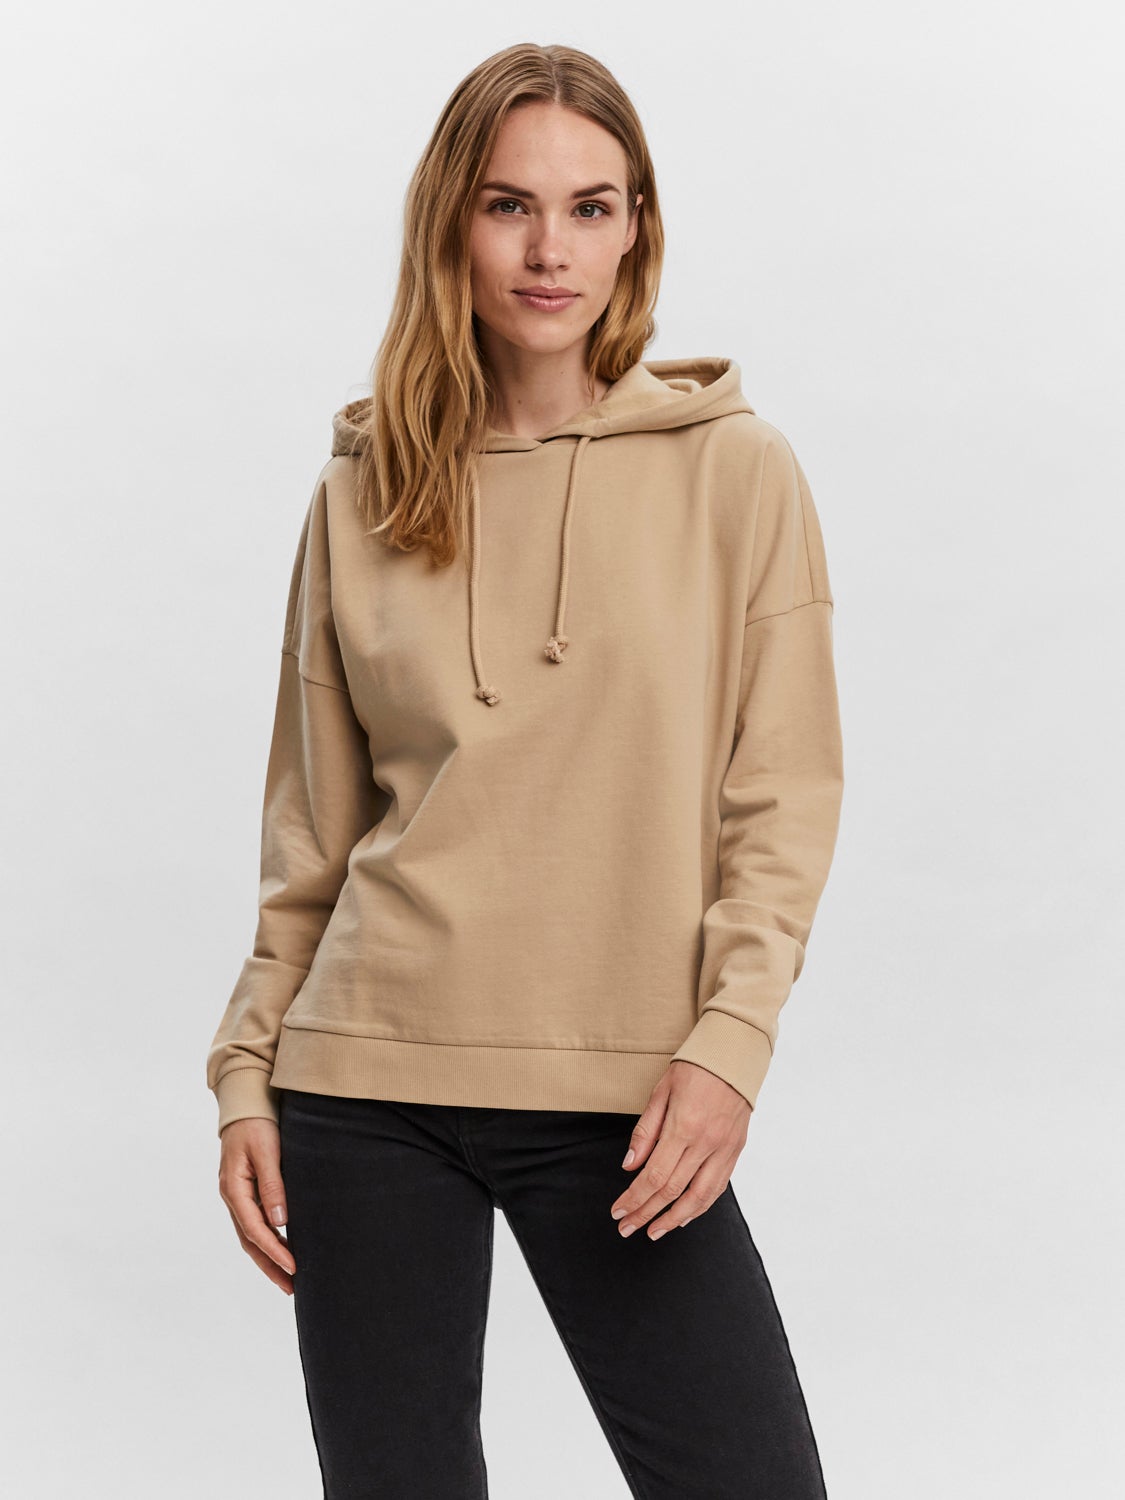 Rabatt 97 % DAMEN Pullovers & Sweatshirts Gerippt Beige L NoName Pullover 